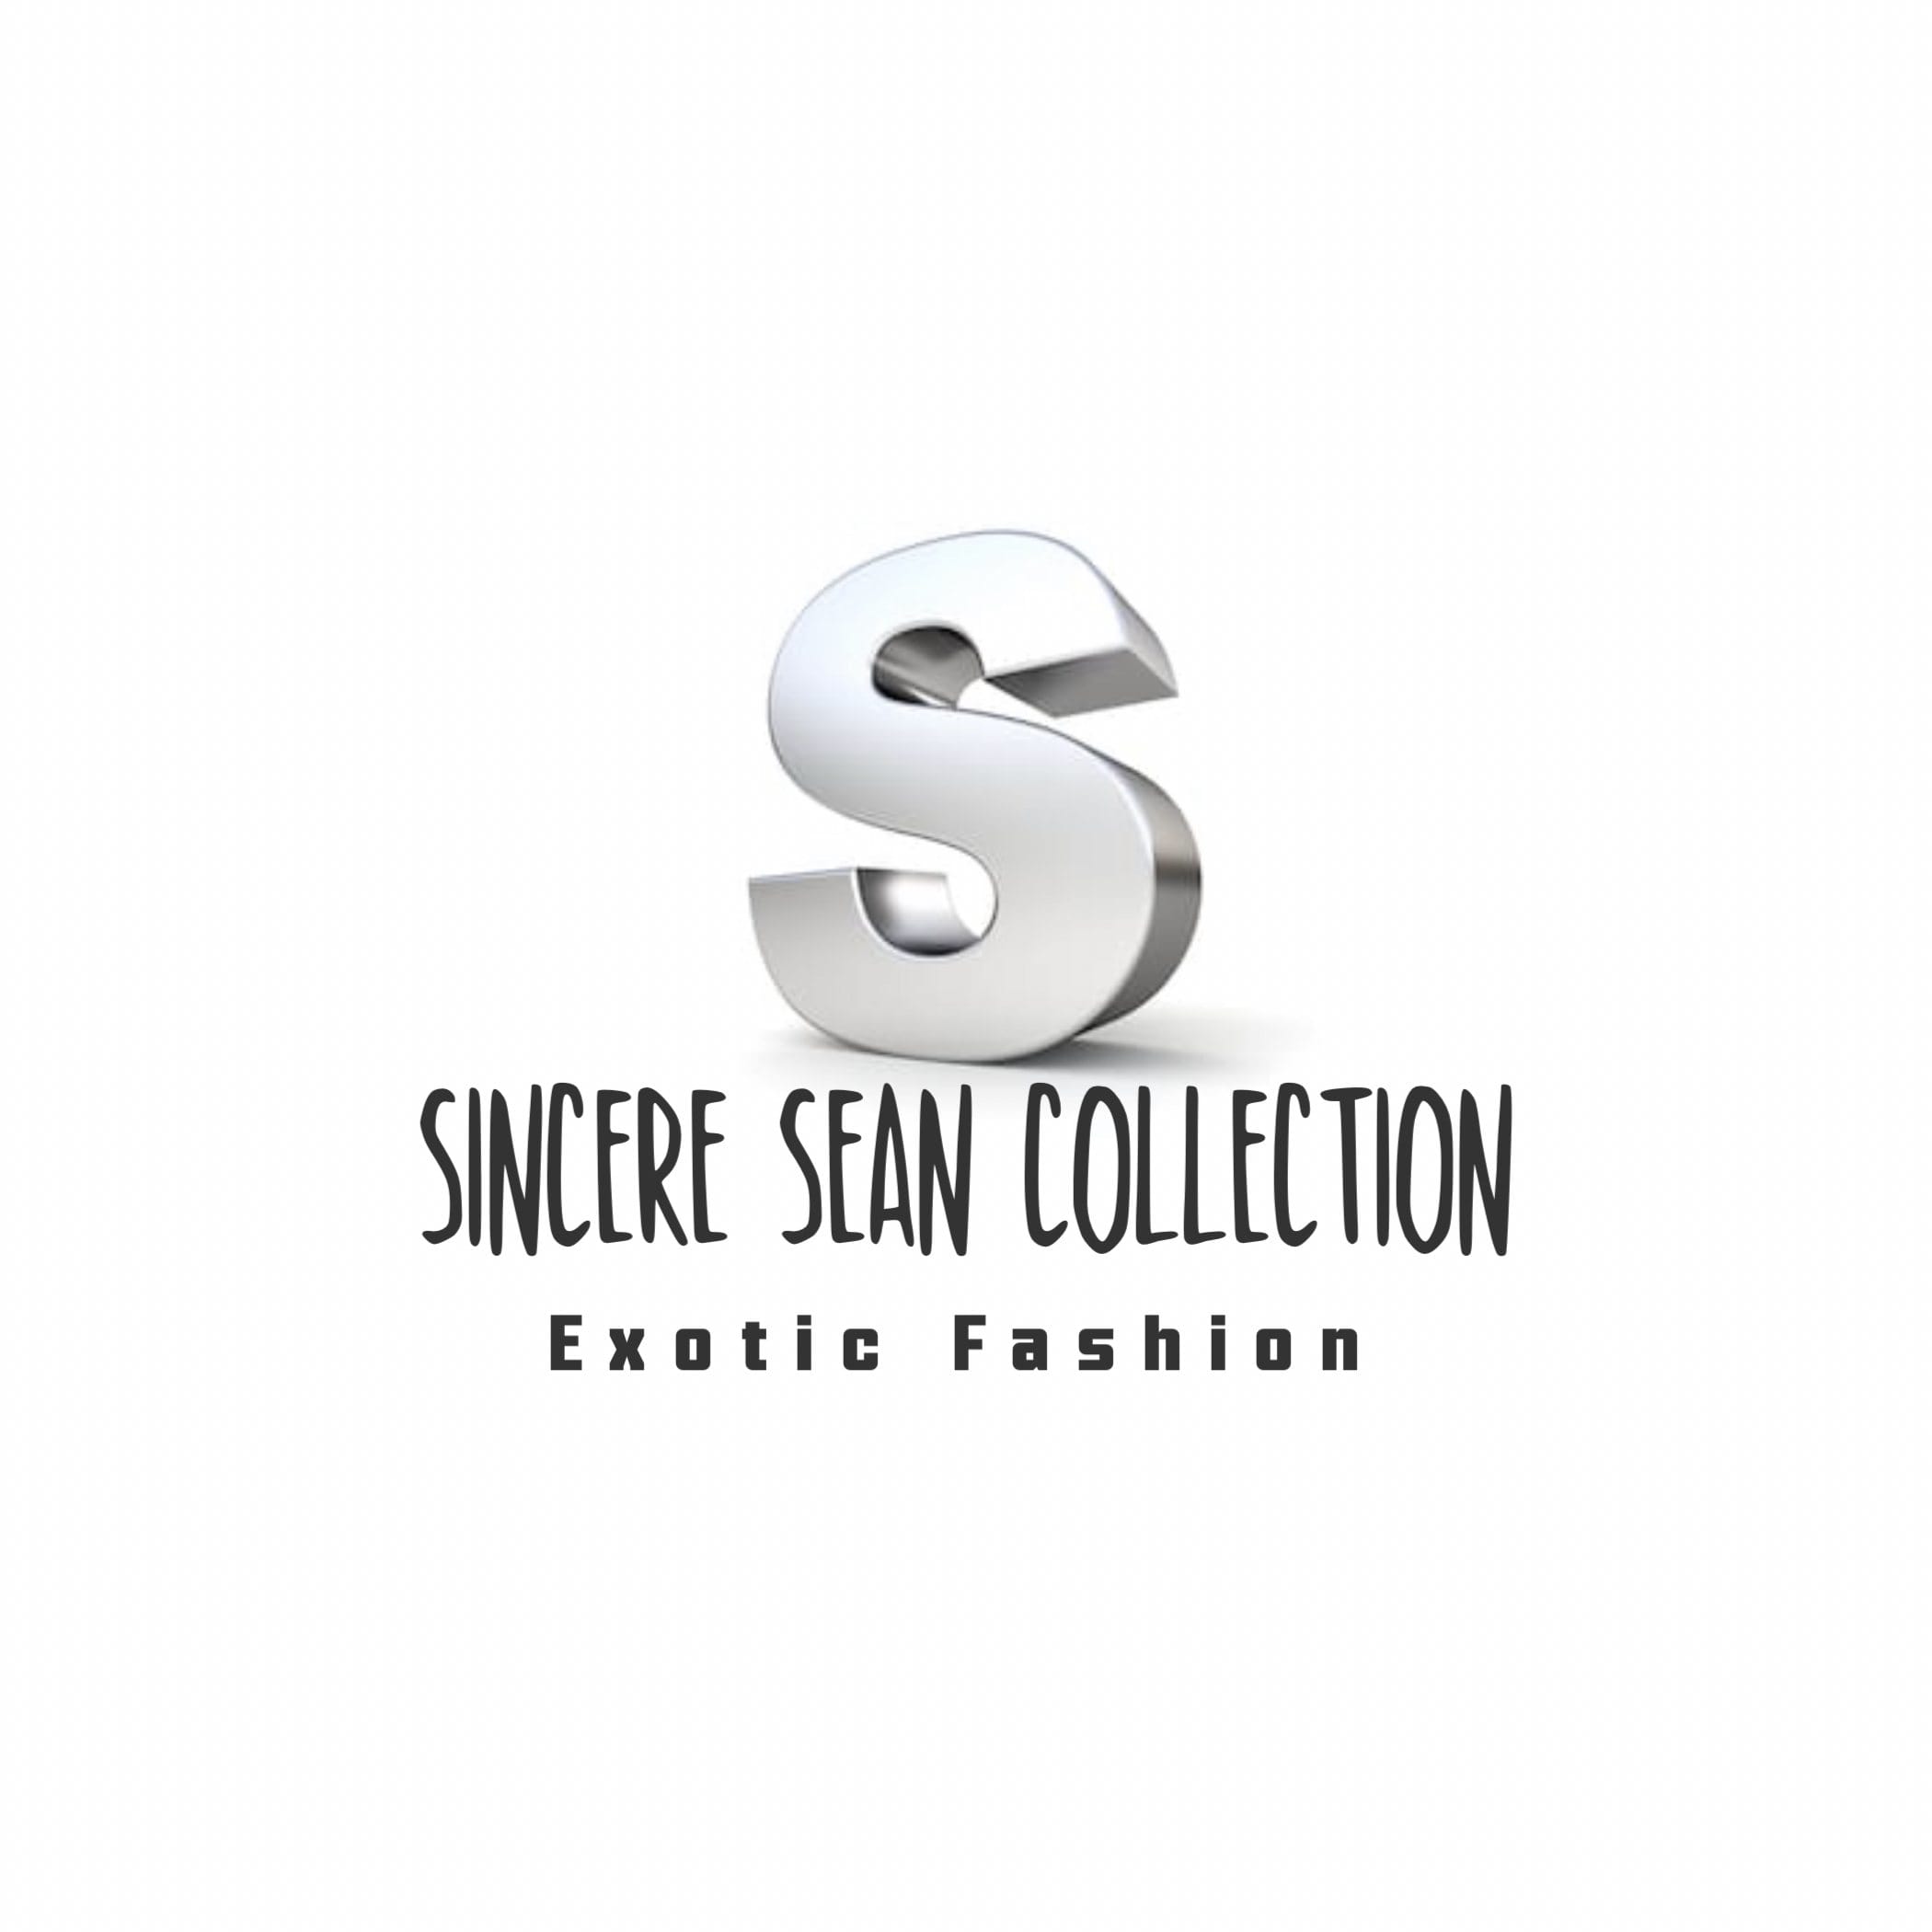 Sincere Sean Collection